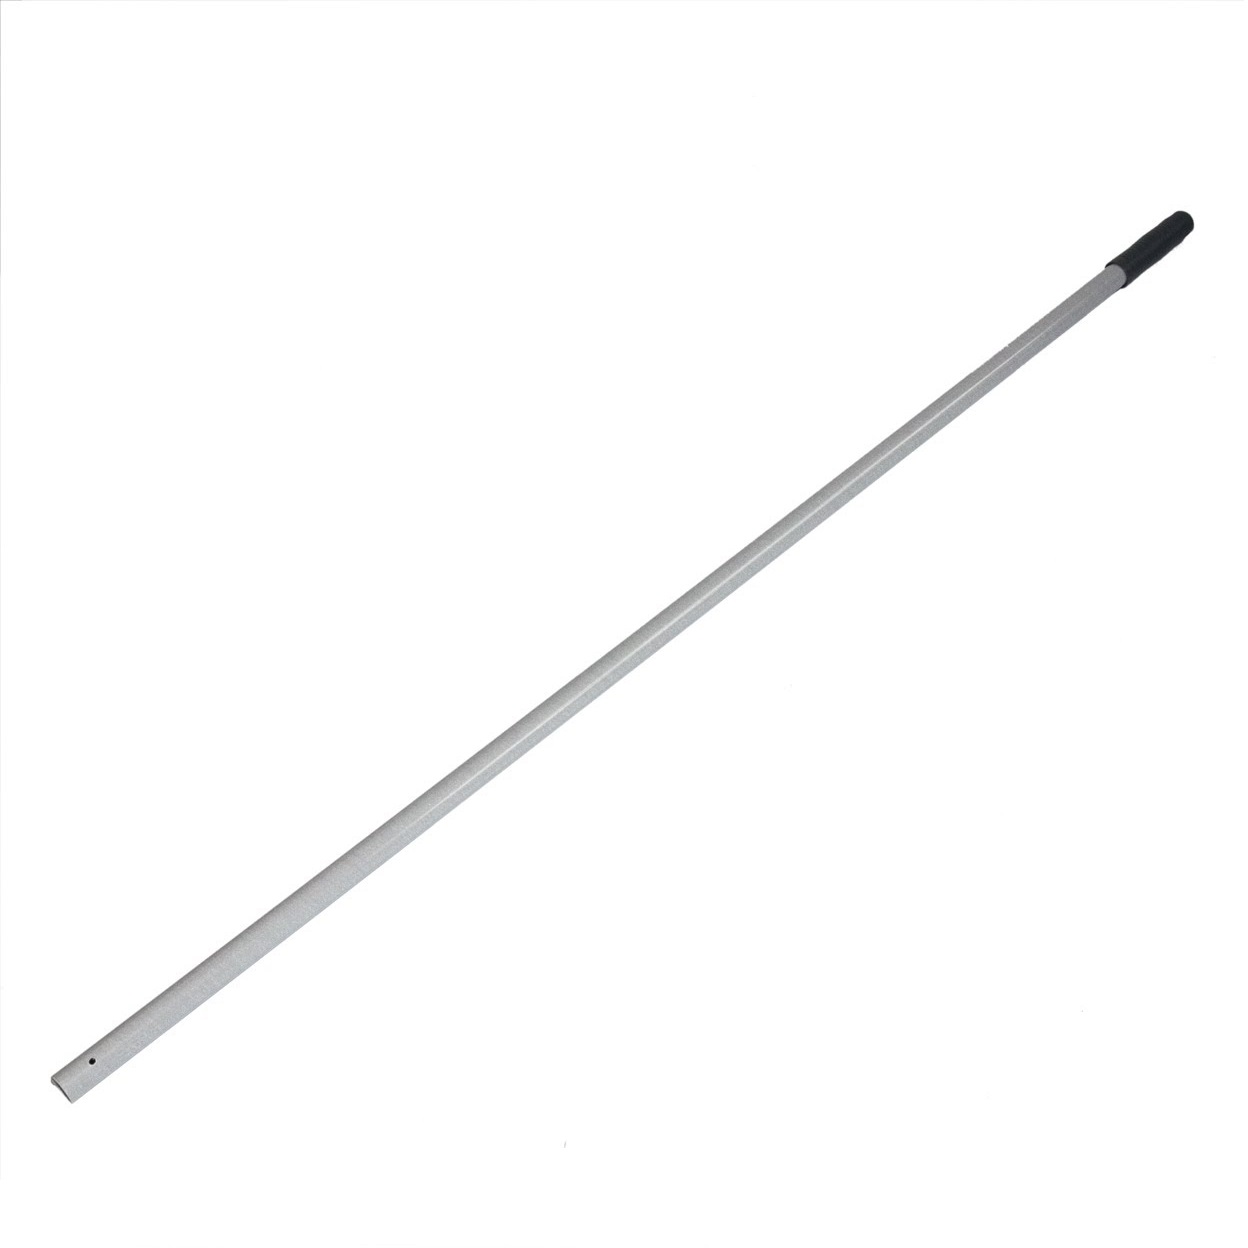 Ручка пласт. для швабры универс. 1шт, TASKI Fibre Glass Handle 140cm 1pc W1/ 7500010  1/1